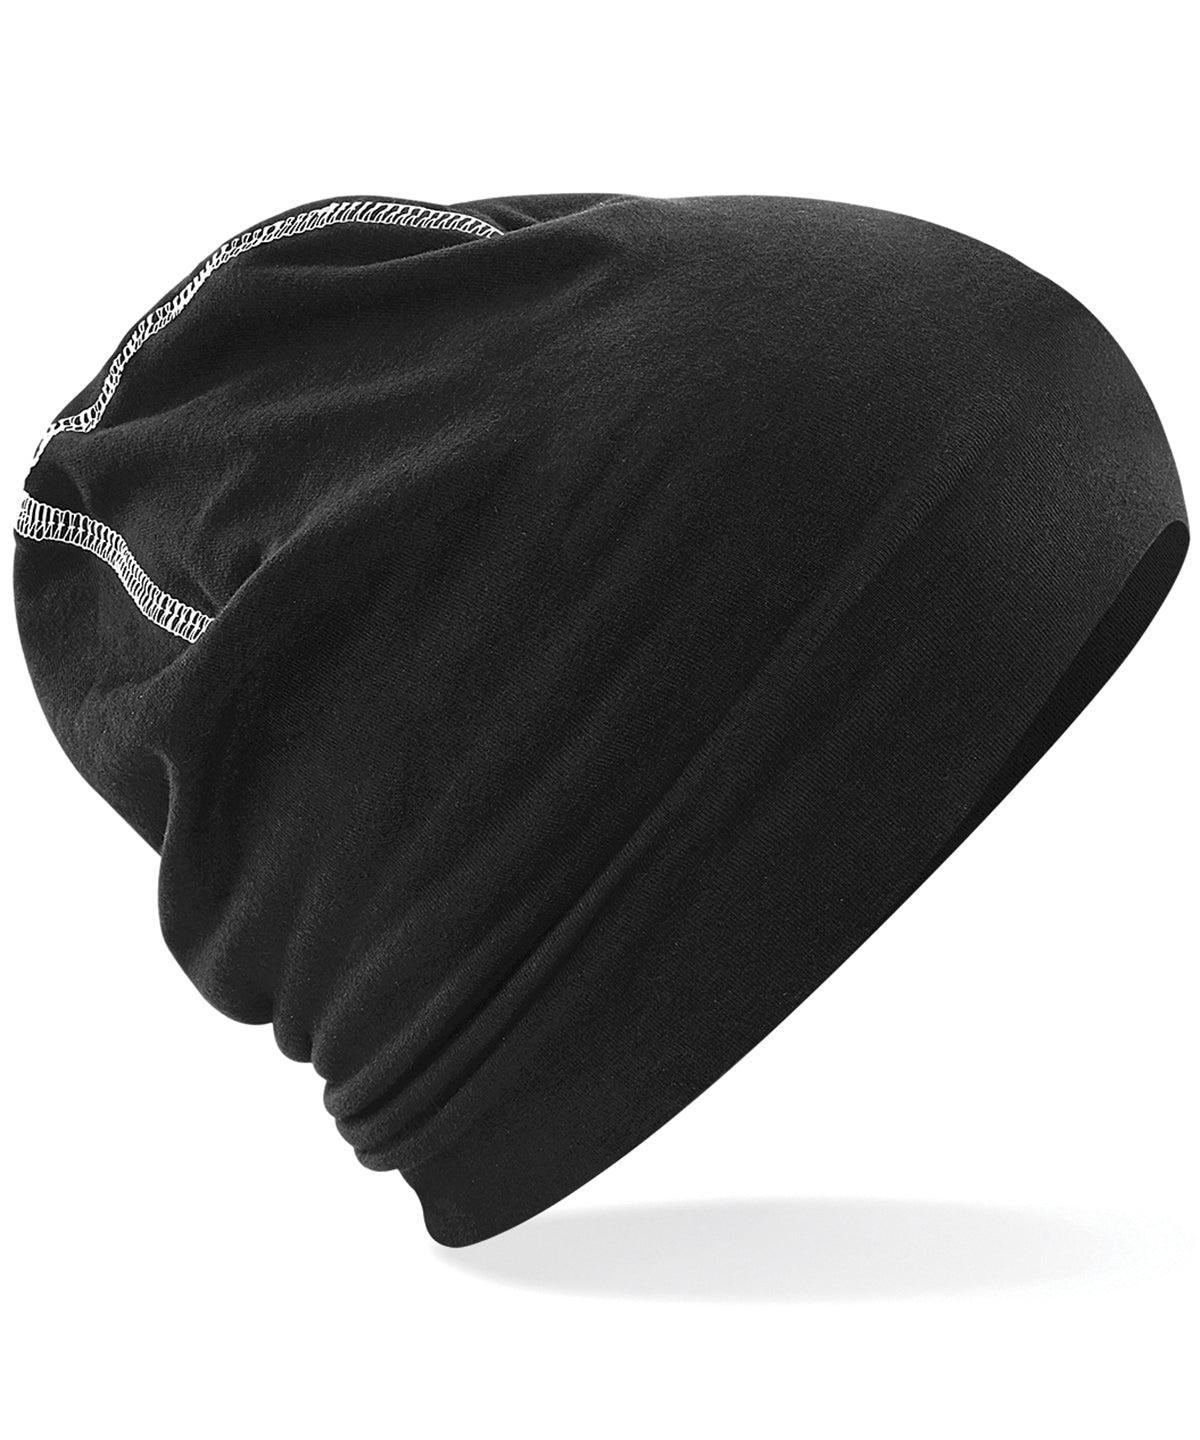 Personalised Hats - Black Beechfield Hemsedal cotton beanie